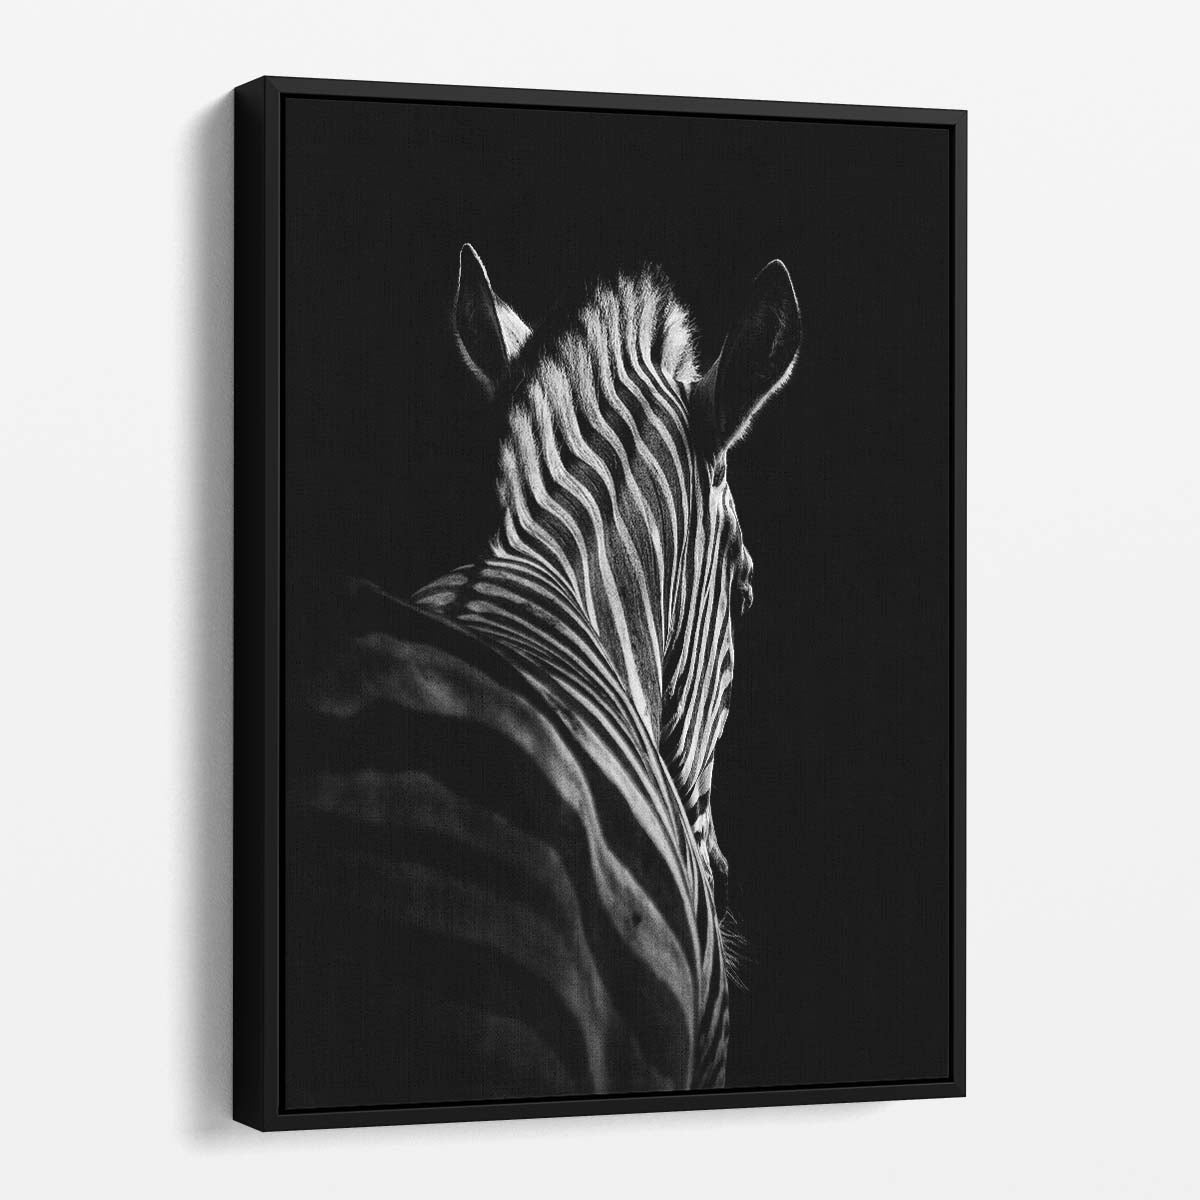 Minimalistic Monochrome Zebra Photography Wall Art, Duisburg Zoo Germany by Luxuriance Designs, made in USA